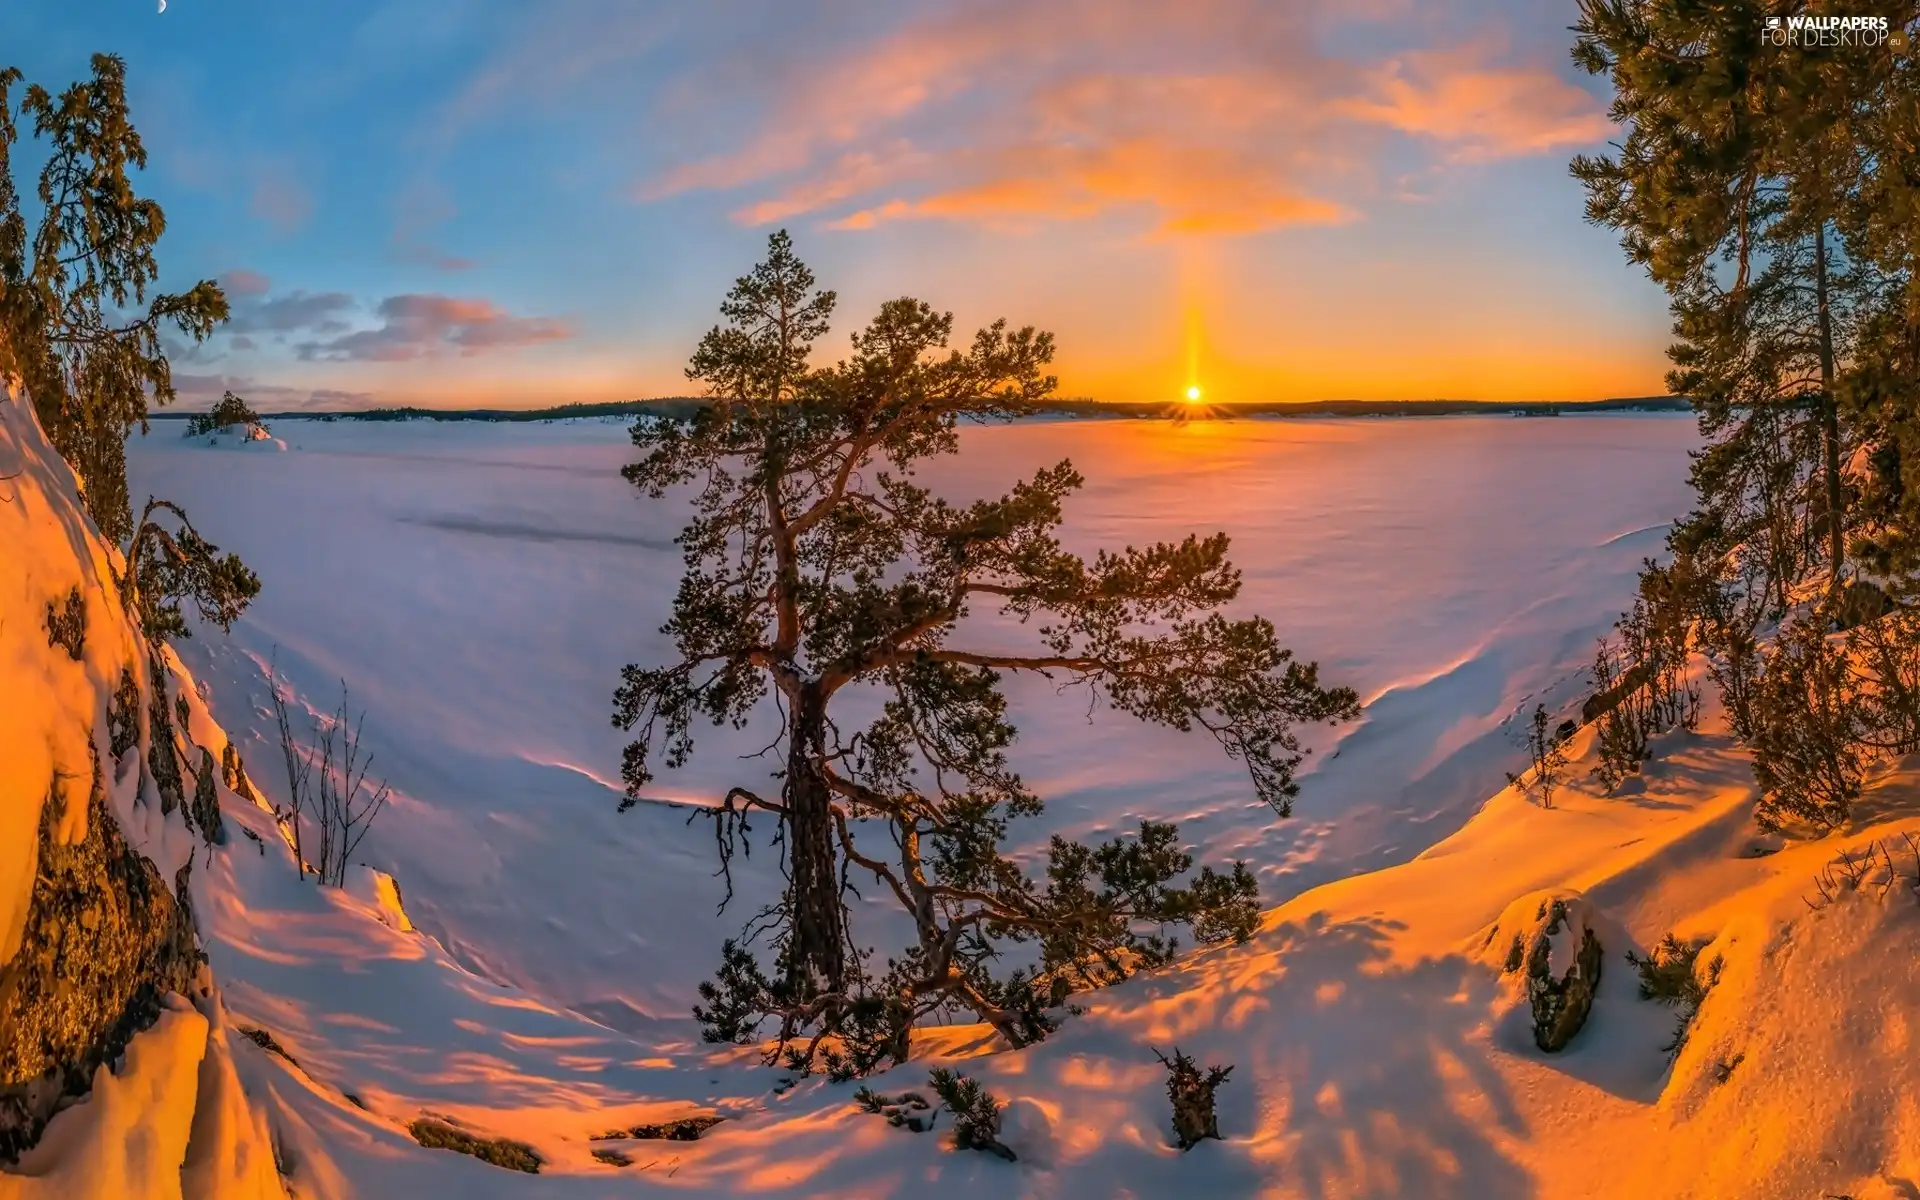 Lake Ladoga, frozen, Great Sunsets, trees, Karelia, Russia, winter, drifts, viewes